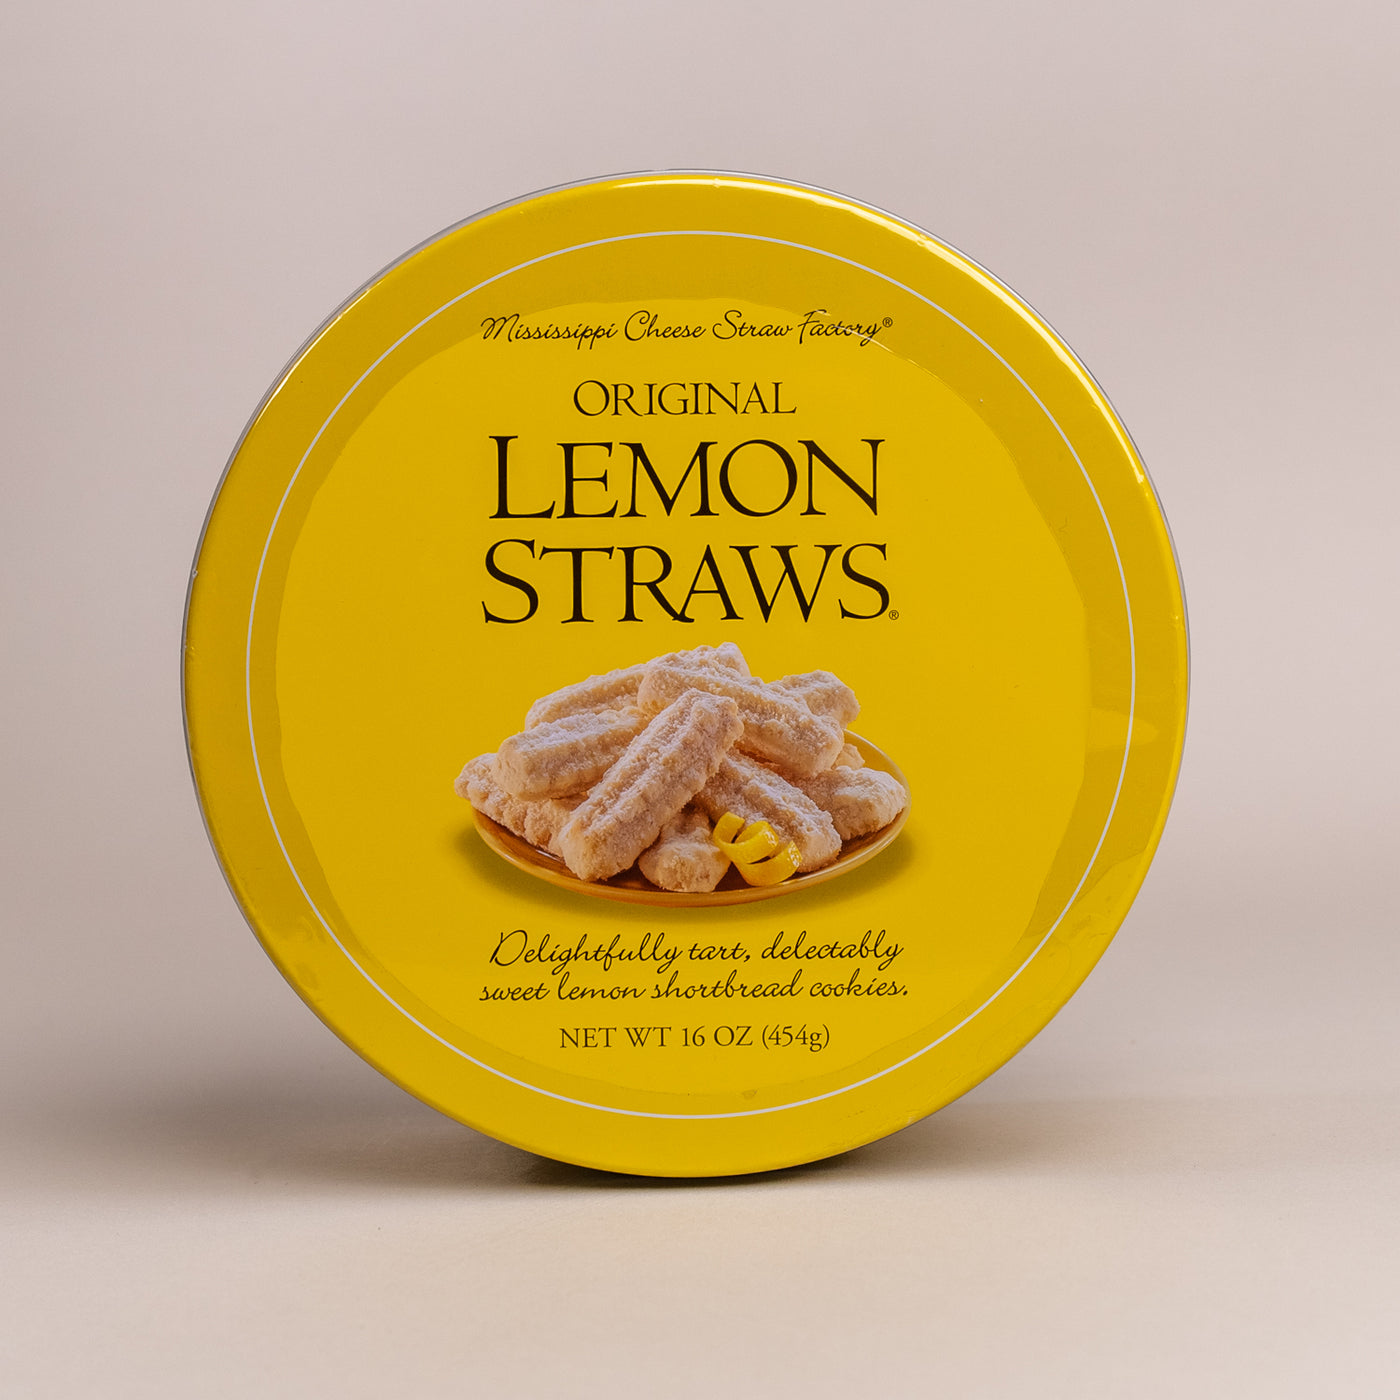 Mississippi Cheese Straw Factory Lemon Straw Tin 16 oz